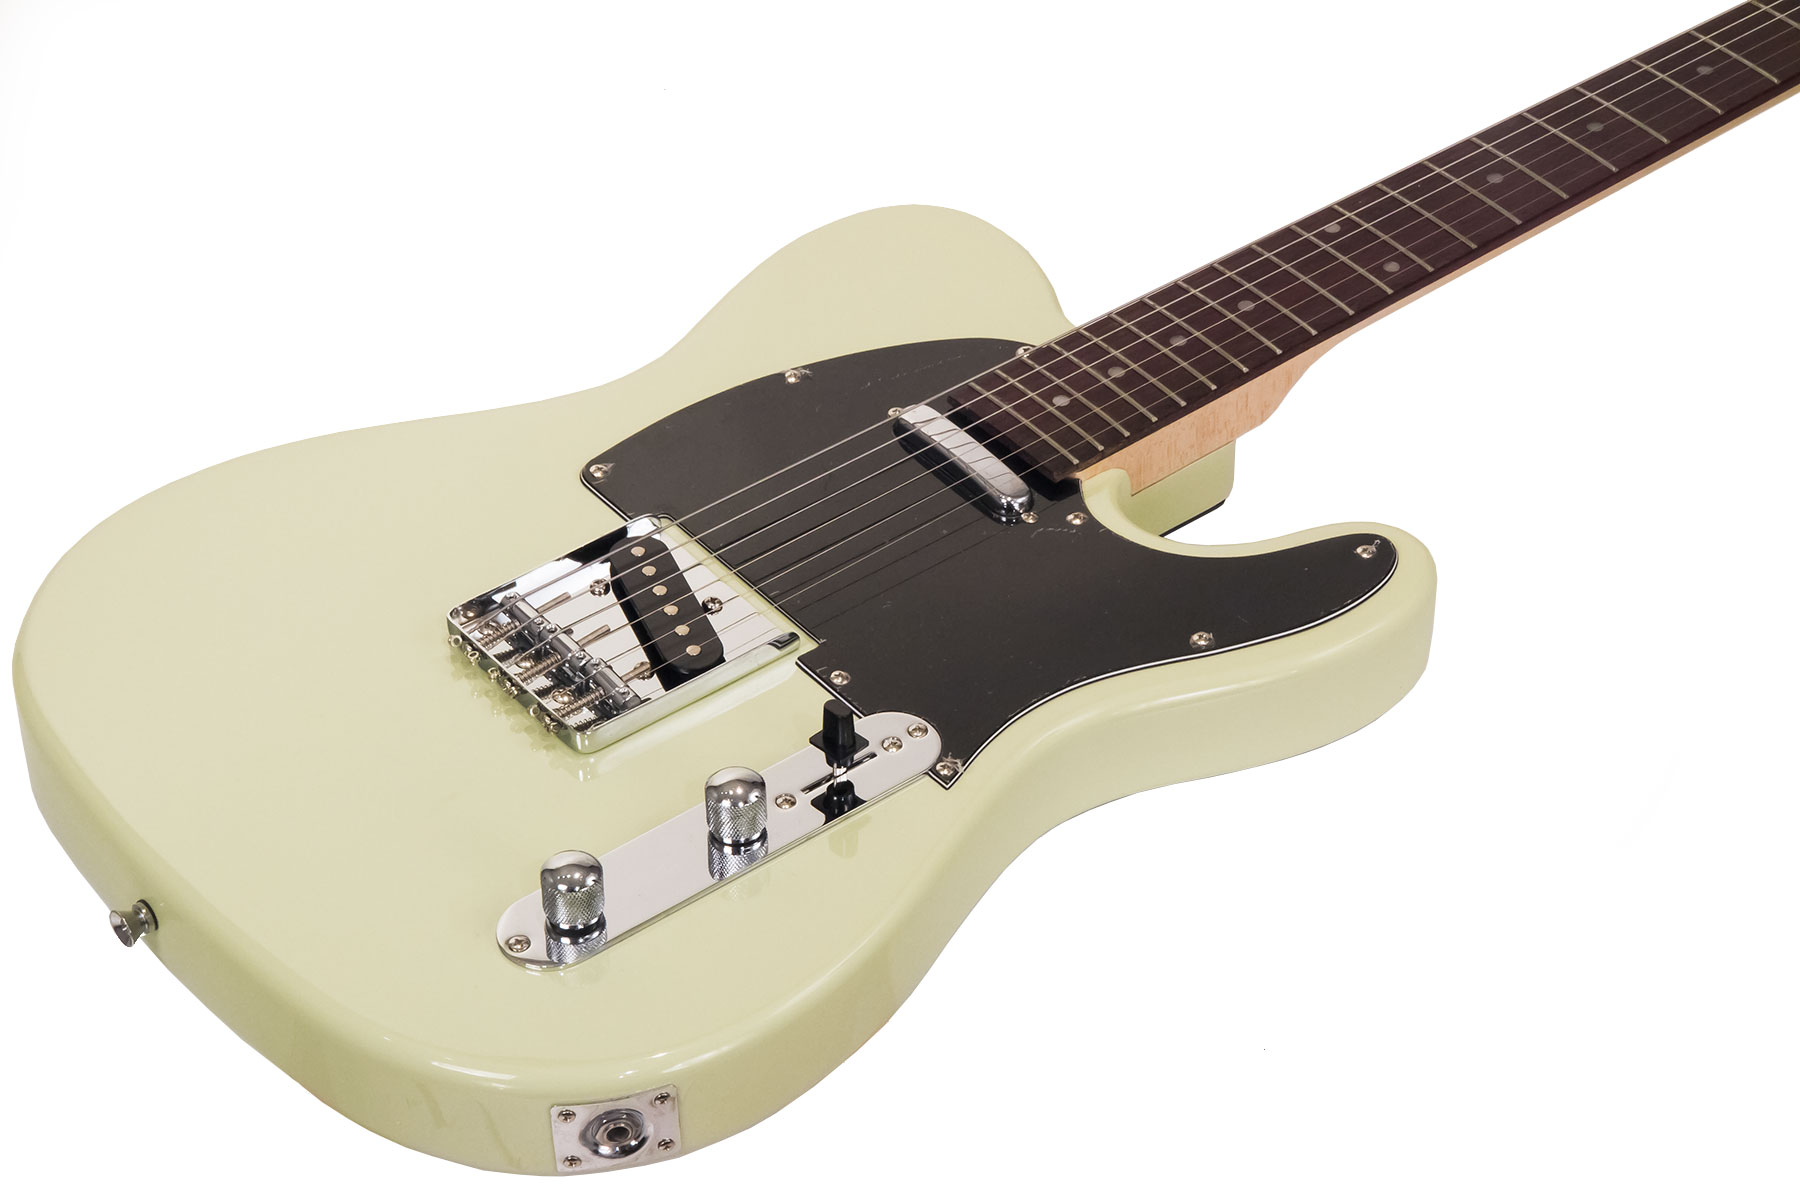 Eastone Tl70 Ss Ht Rw - Ivory - Televorm elektrische gitaar - Variation 1